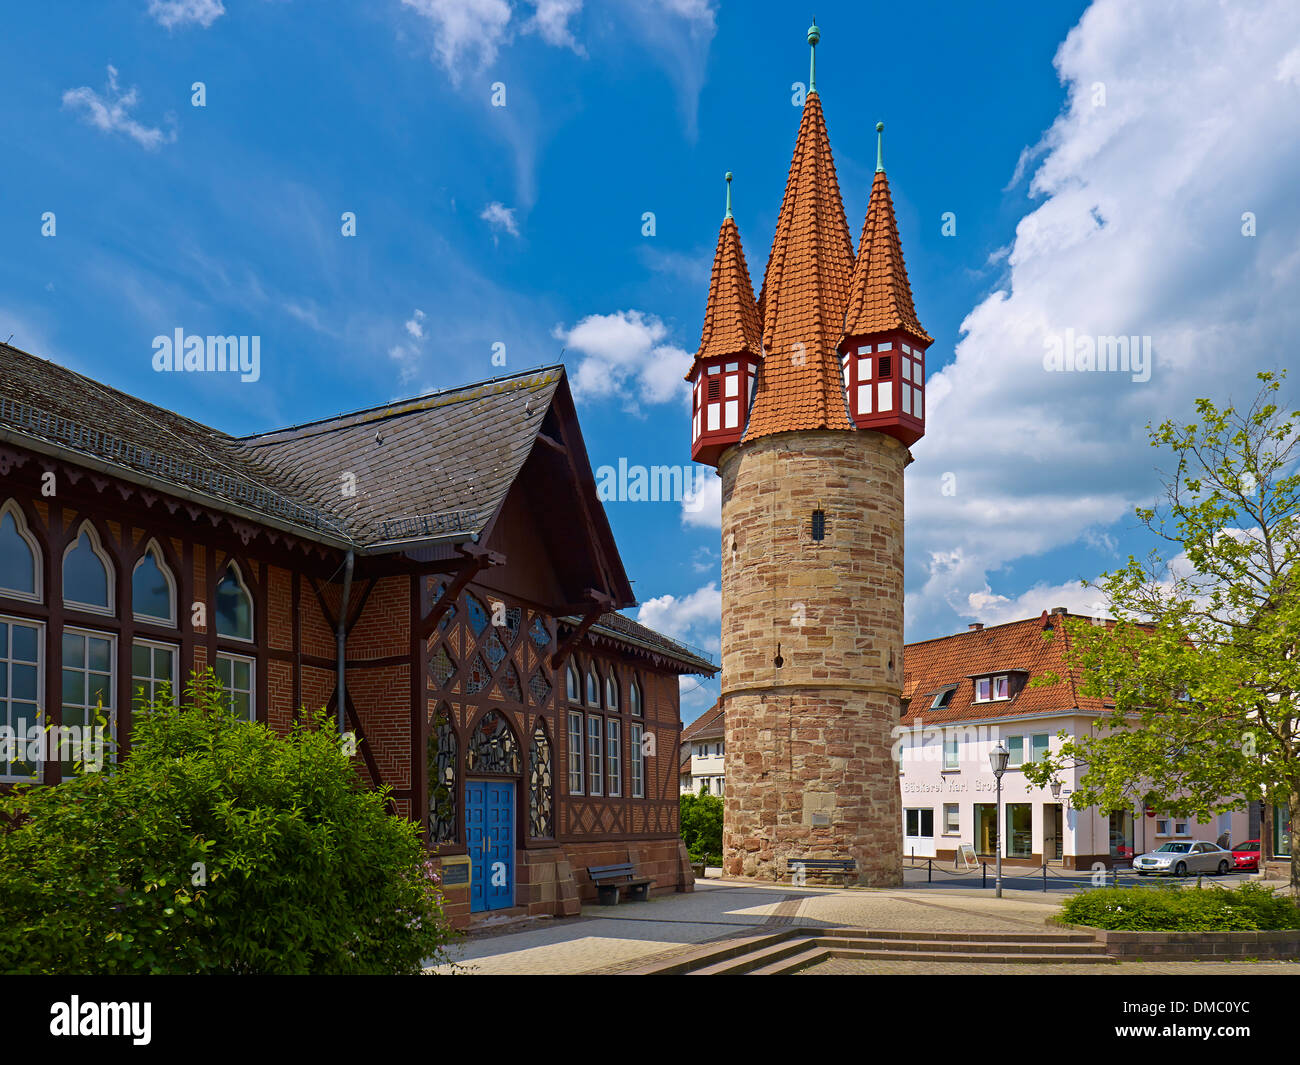 The Duenzebacher gate tower in Eschwege, Werra-Meißner district, Hesse, Germany Stock Photo